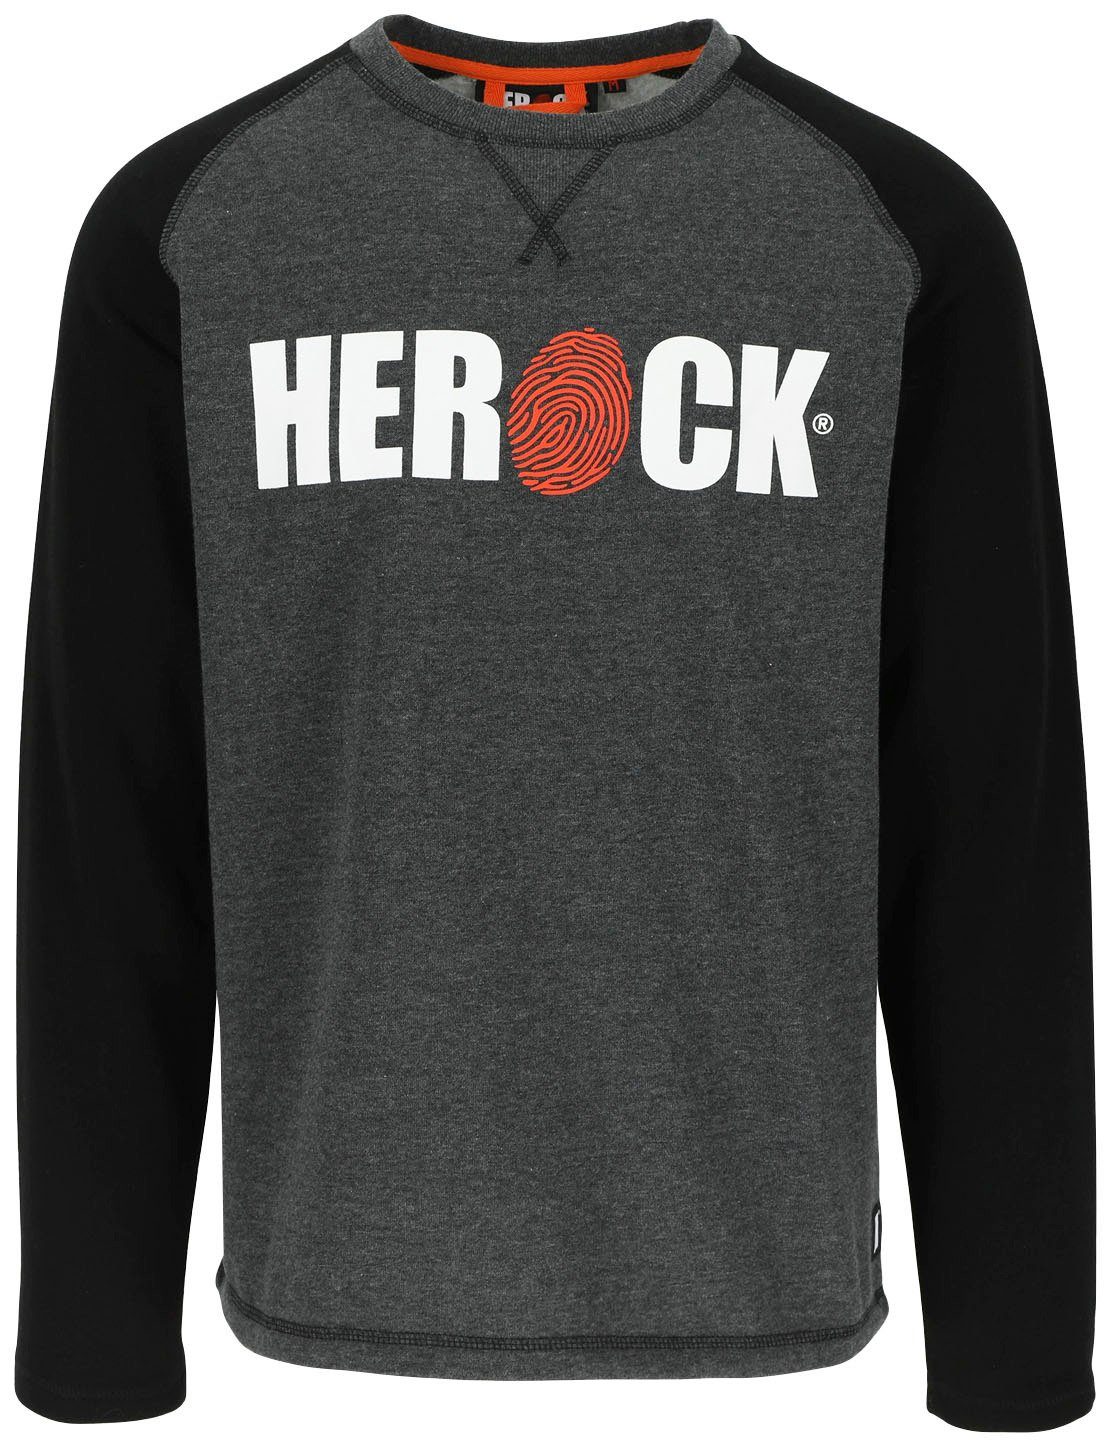 ROLES Herock®- Sweater Rundhals, Herock mit Schwarz/Grau Aufdruck, Langarmshirt 2-Farbig T-Shirt/Sweater,